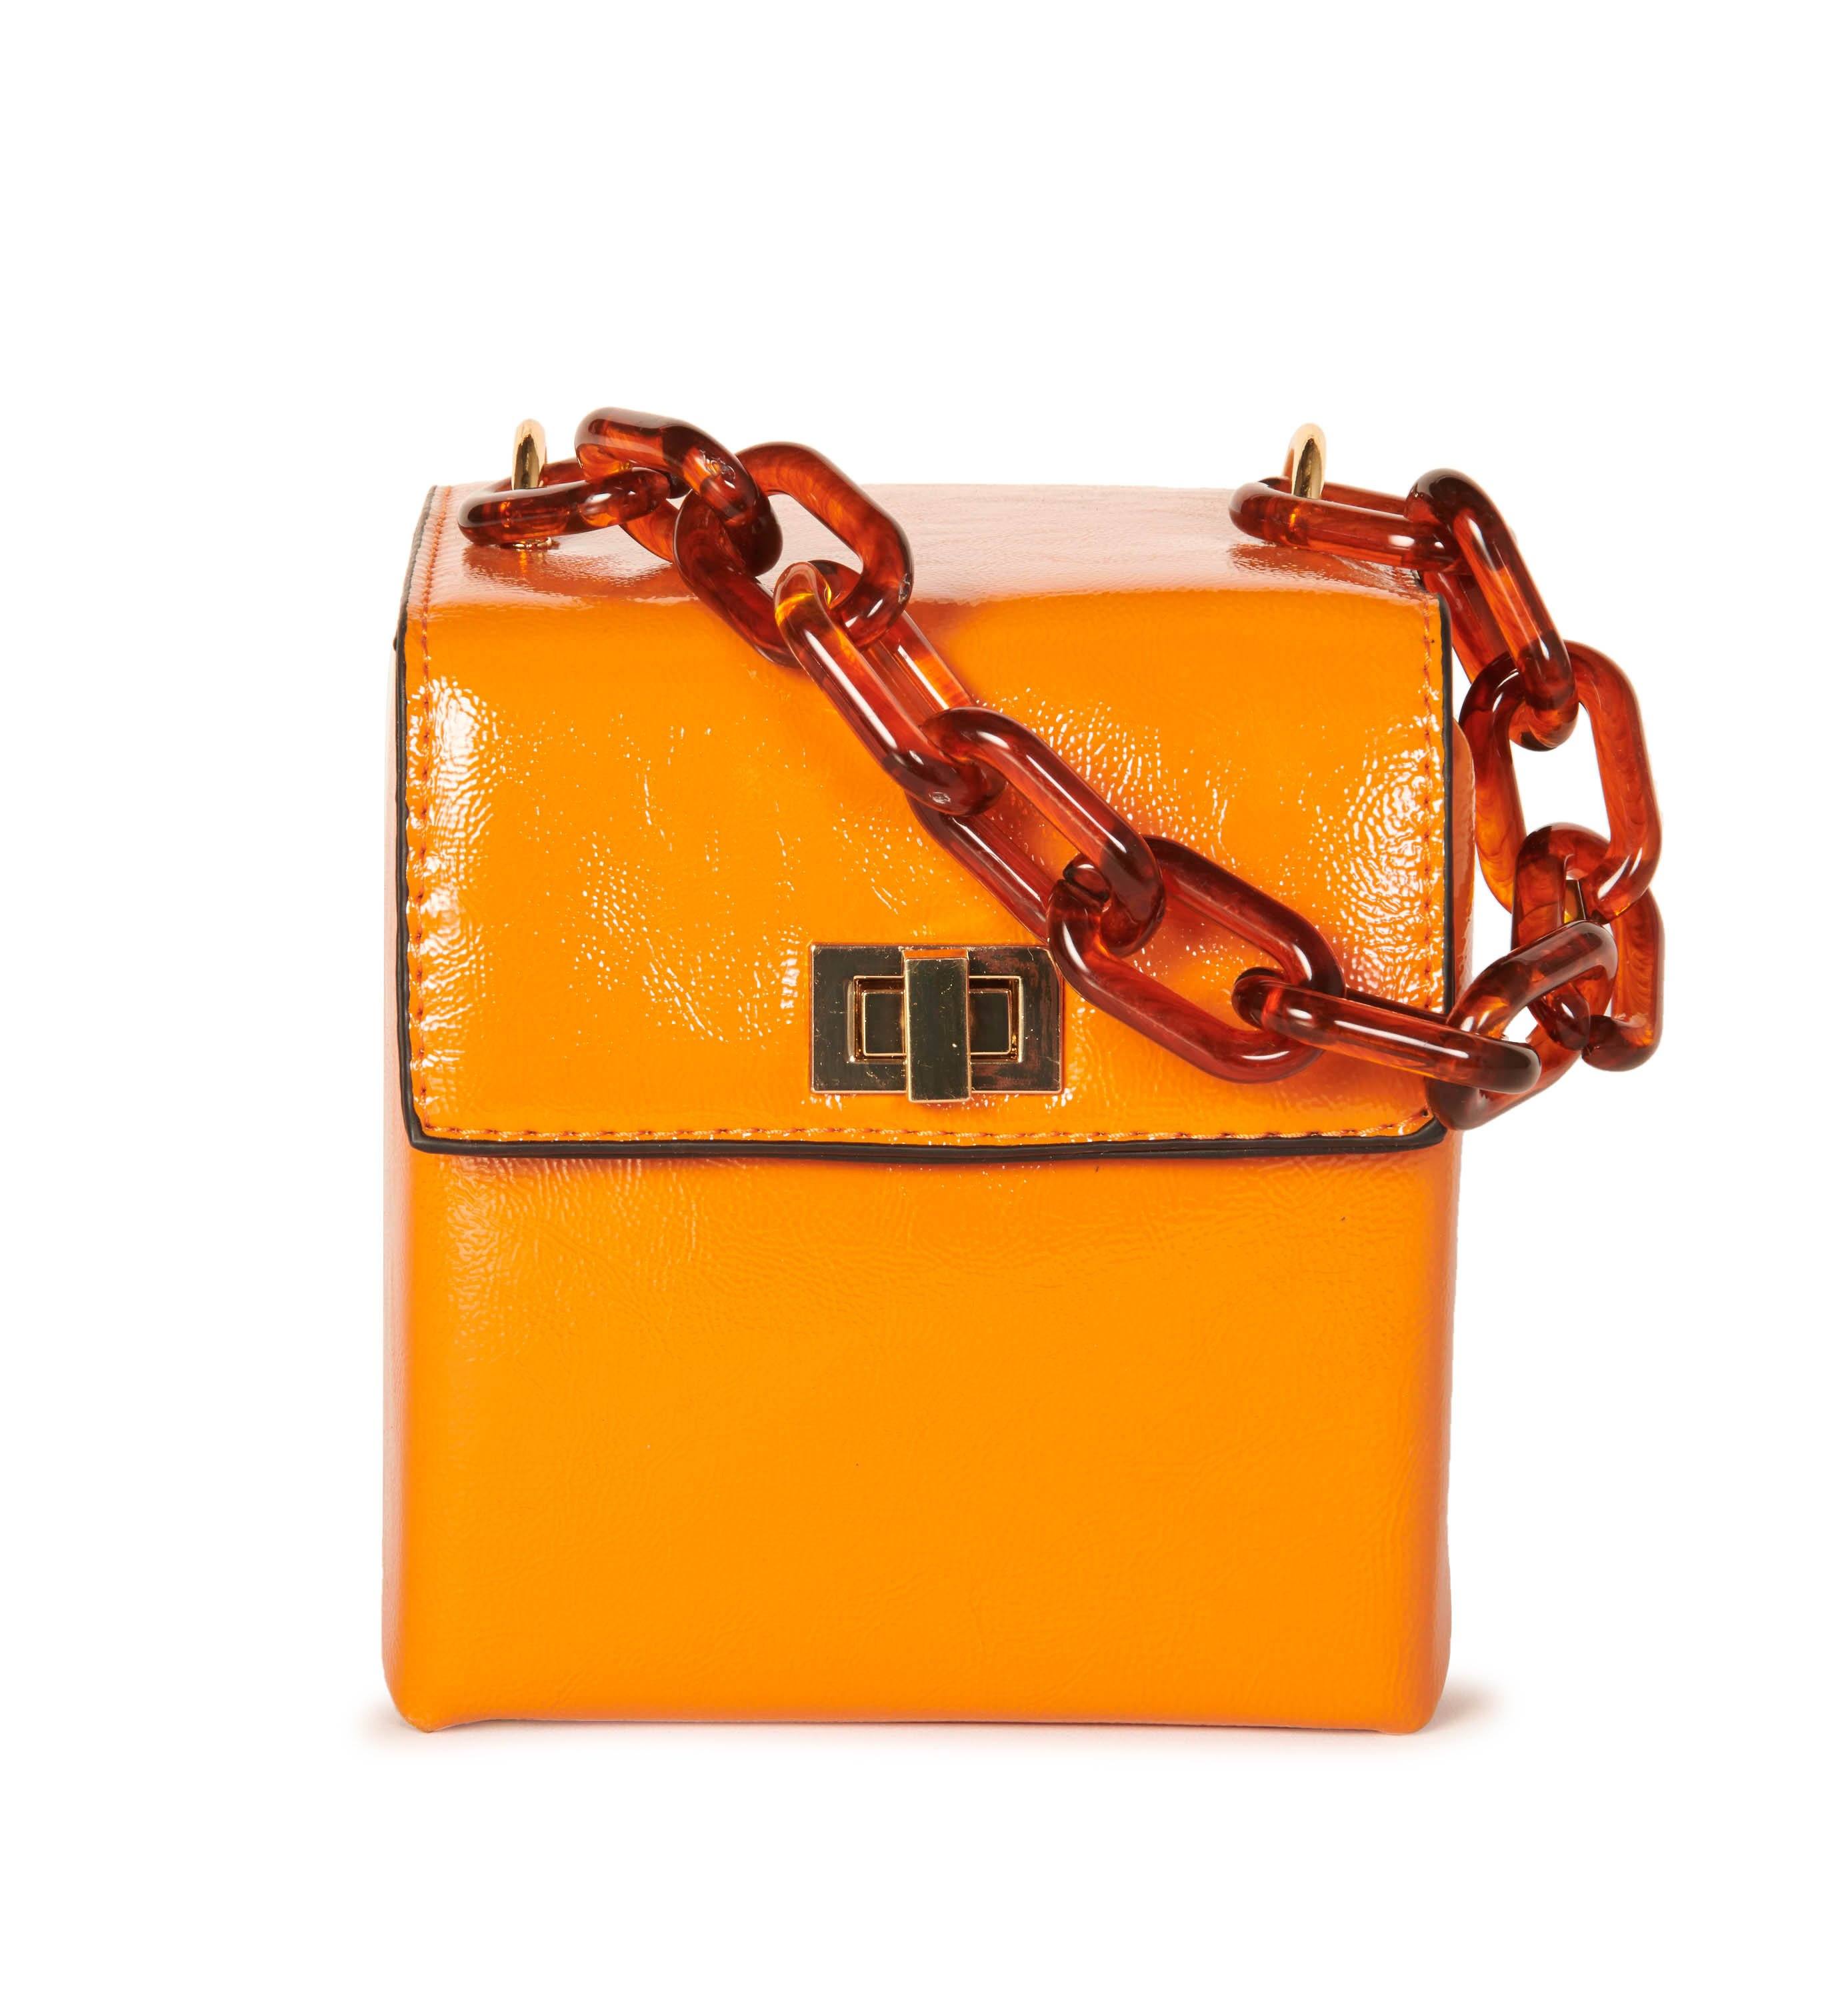 hypeach vintage inspired orange pill box purse accessories hypeach boutique 676283